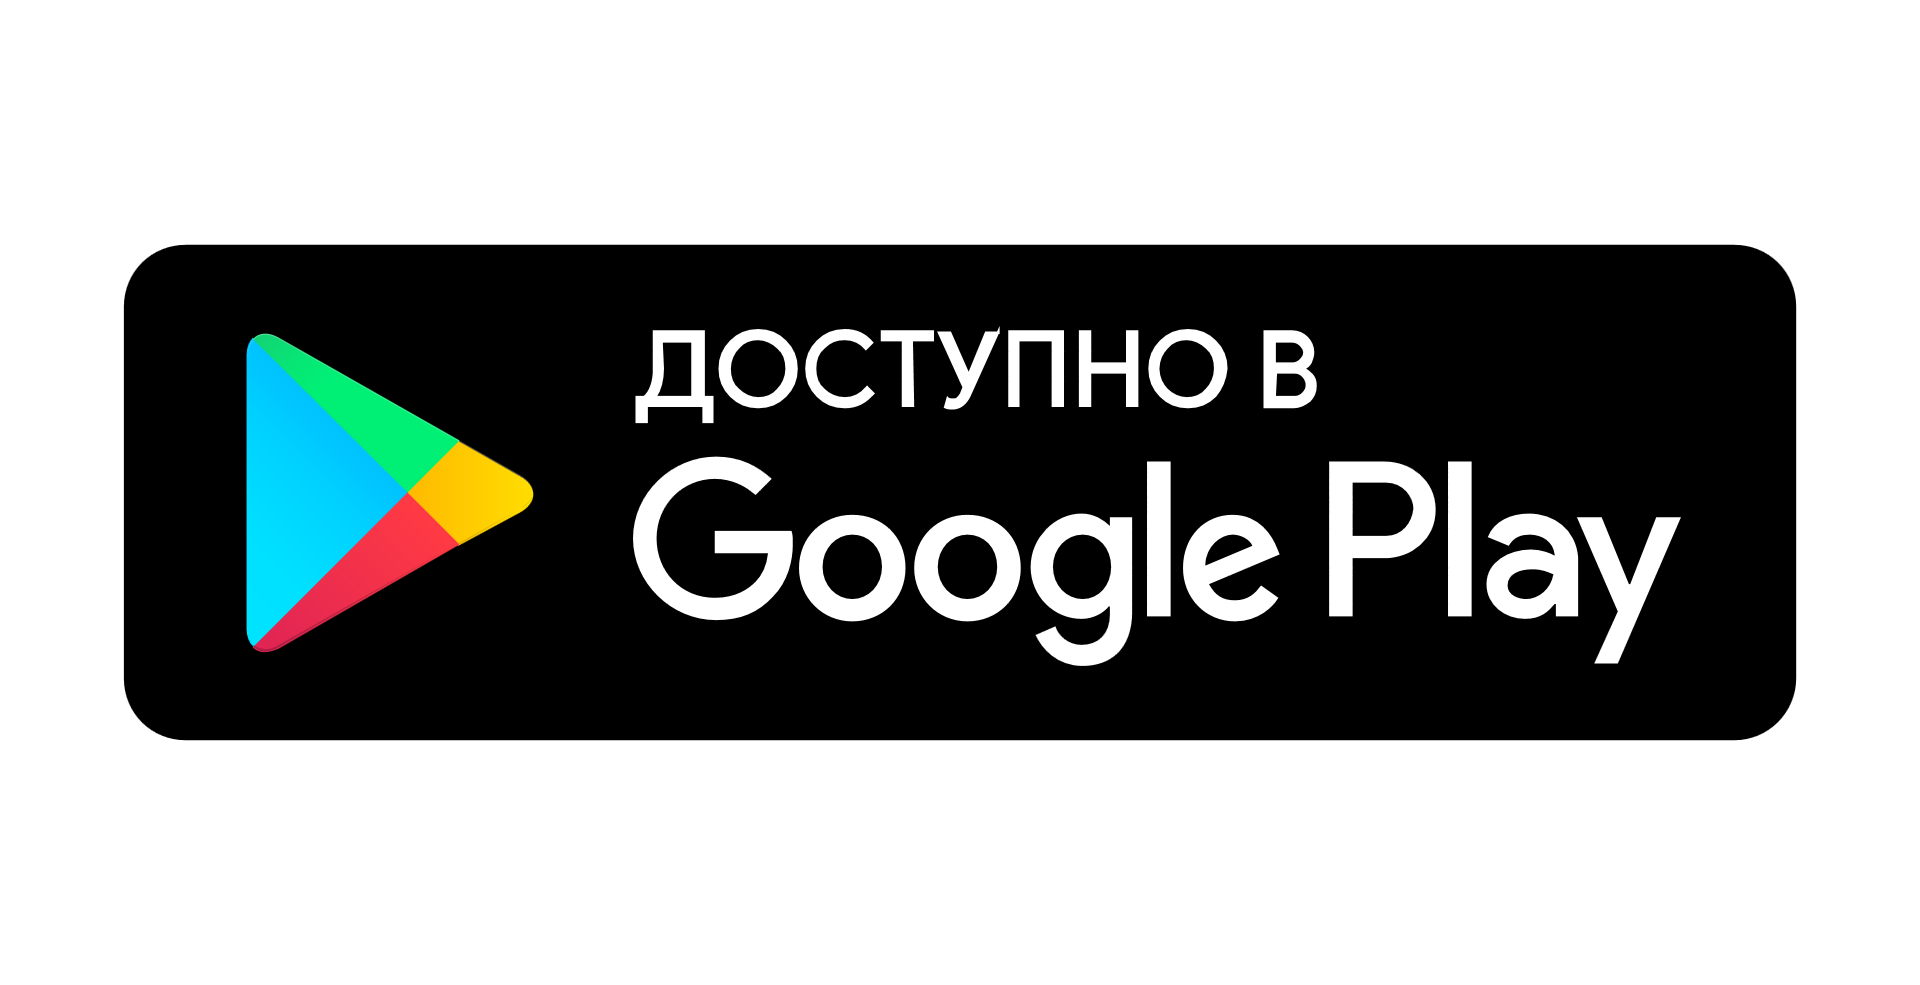 Гугл плей. Логотип Google Play. Доступно в гугл плей. Доступно в гугл плей иконка. Google play d